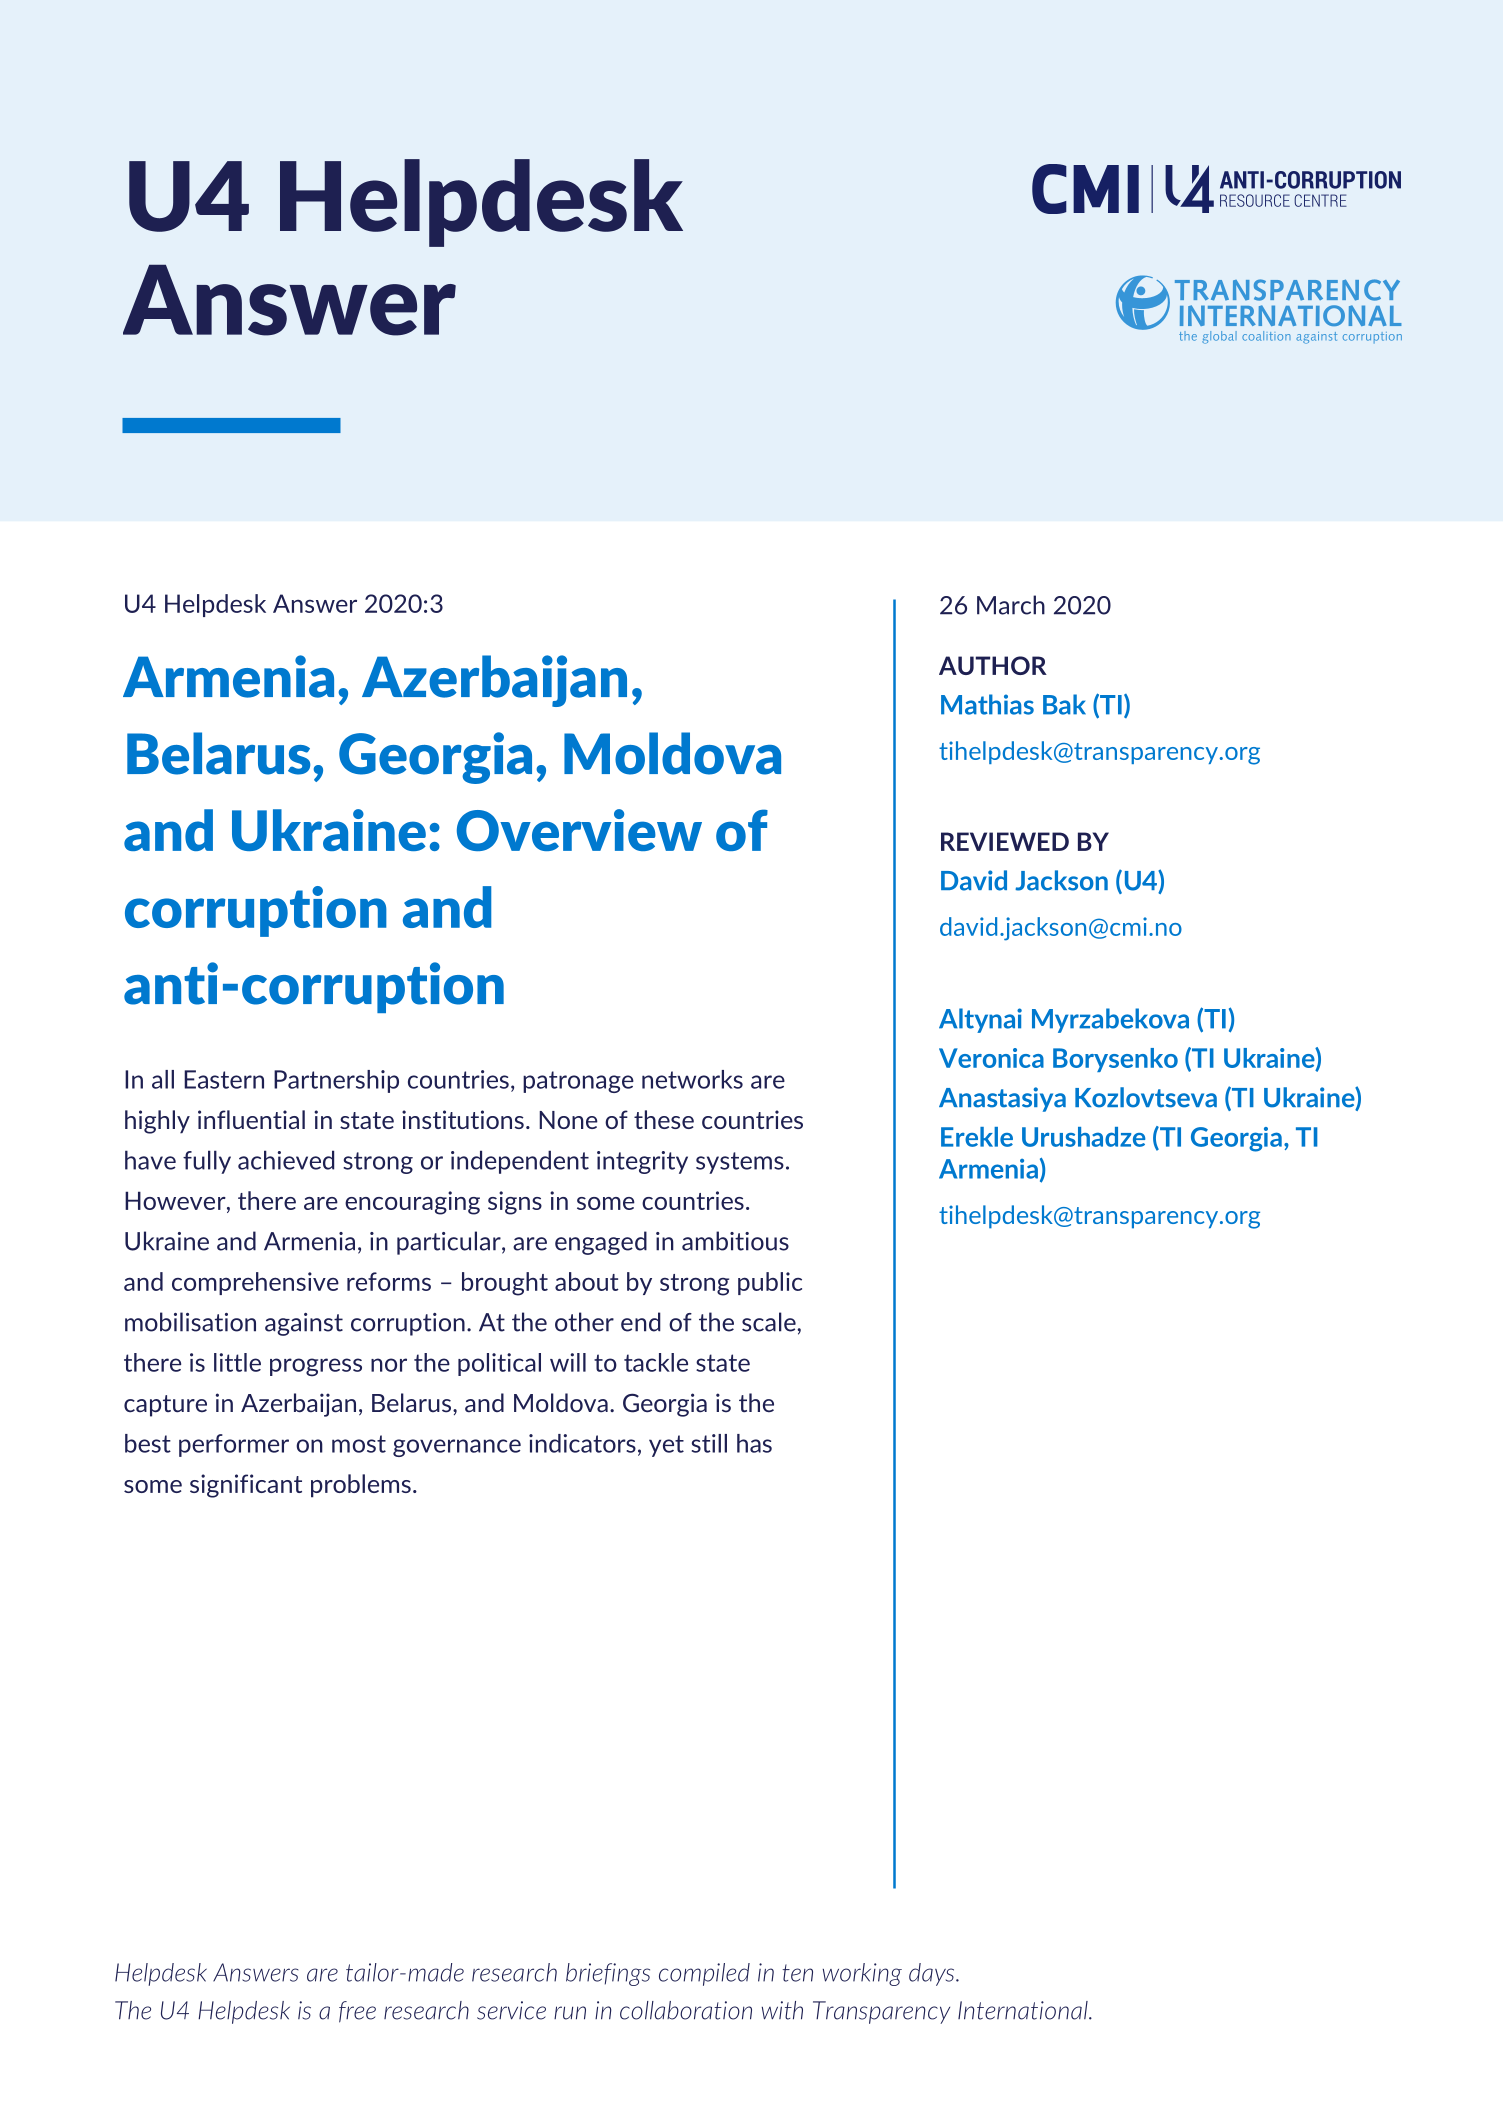 Armenia, Azerbaijan, Belarus, Georgia, Moldova and Ukraine: Overview of corruption and anti corruption